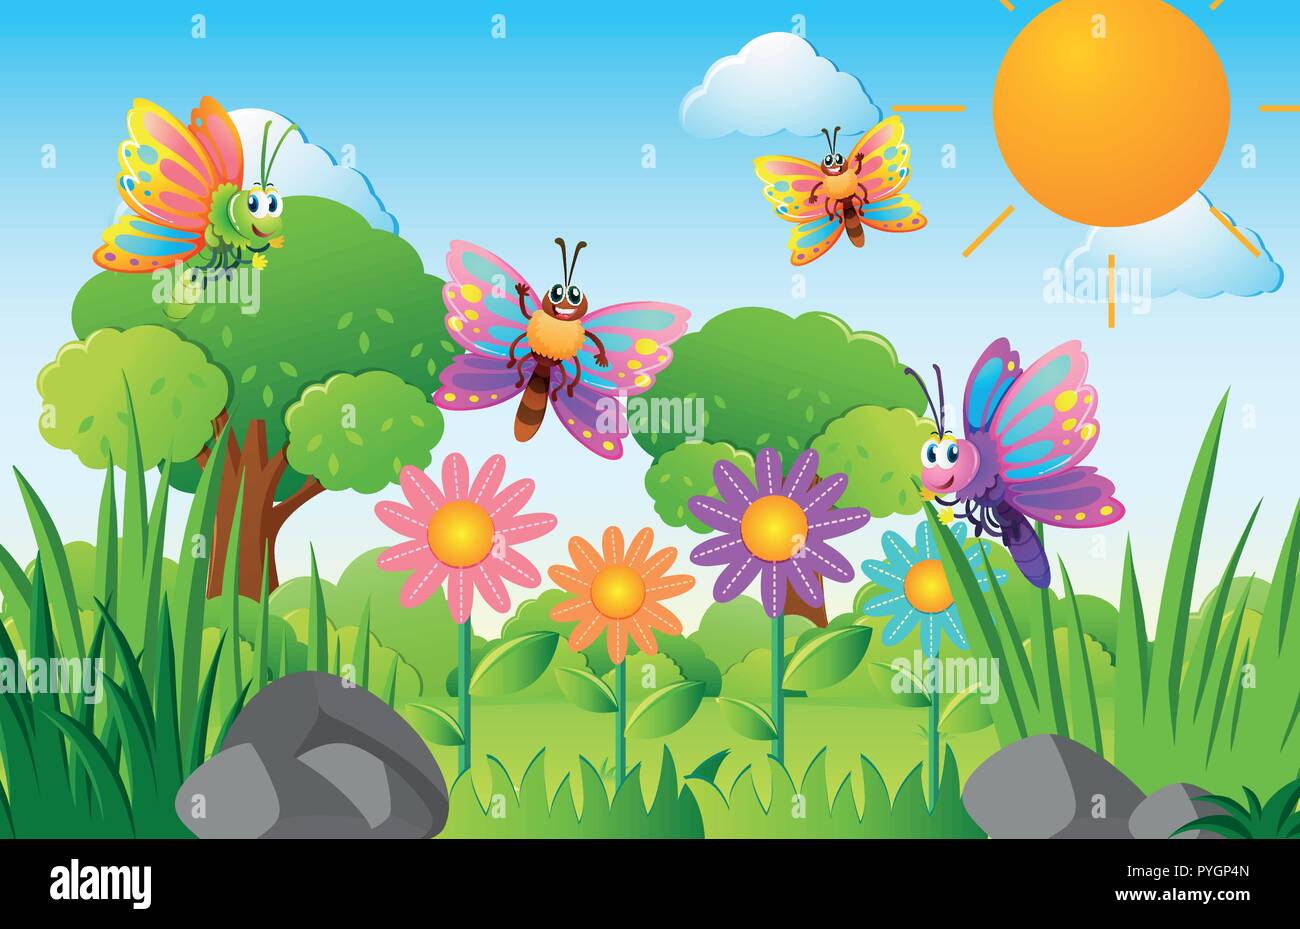 Butterflies flying in flower garden illustration Stock Vector ...